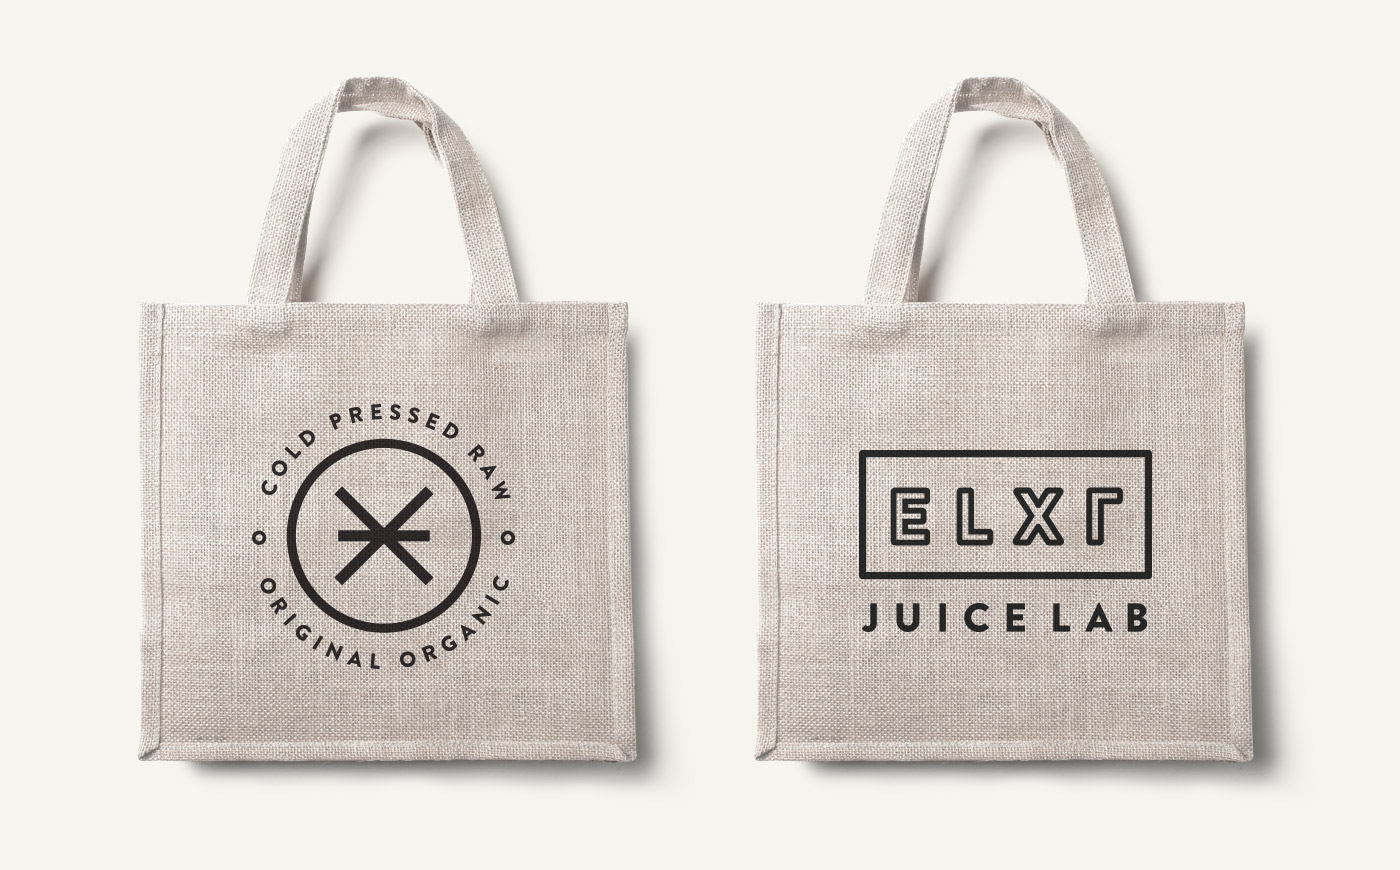 ELXR Juice Lab Brand Case Study